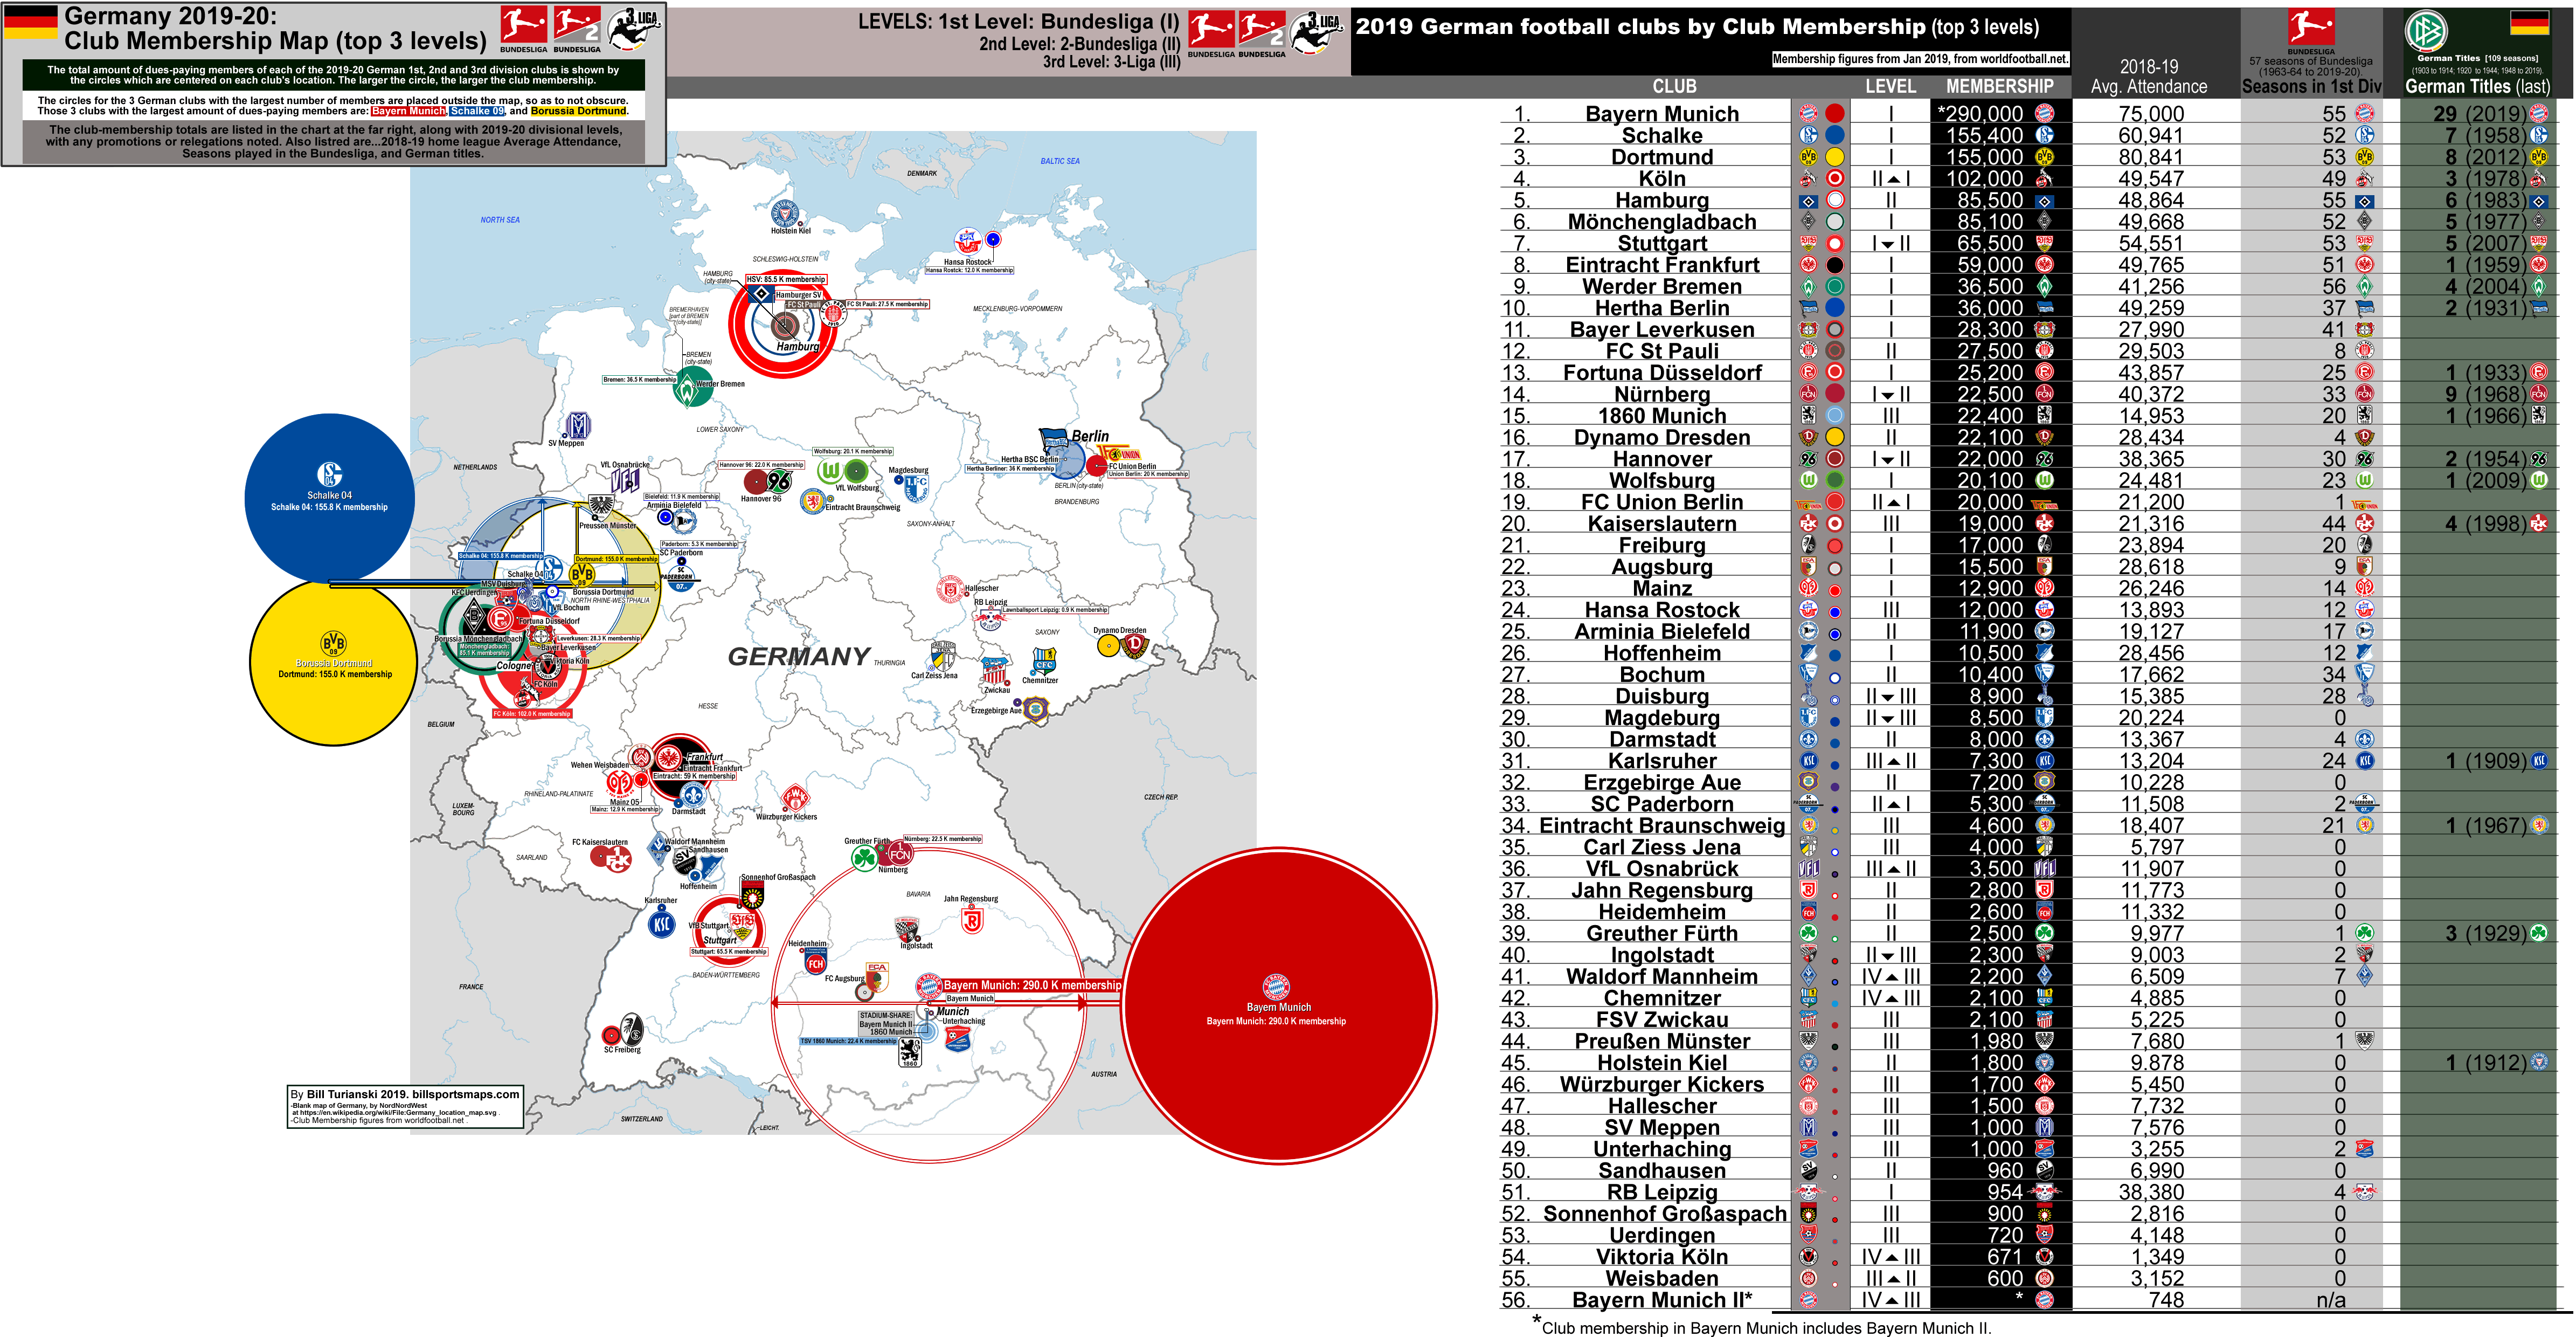 Germany 2019 20 Map Showing Club Membership Sizes Top 3 Levels Bundesliga 2 Bundesliga 3 Liga 56 Teams Figures From January 2019 Billsportsmaps Com